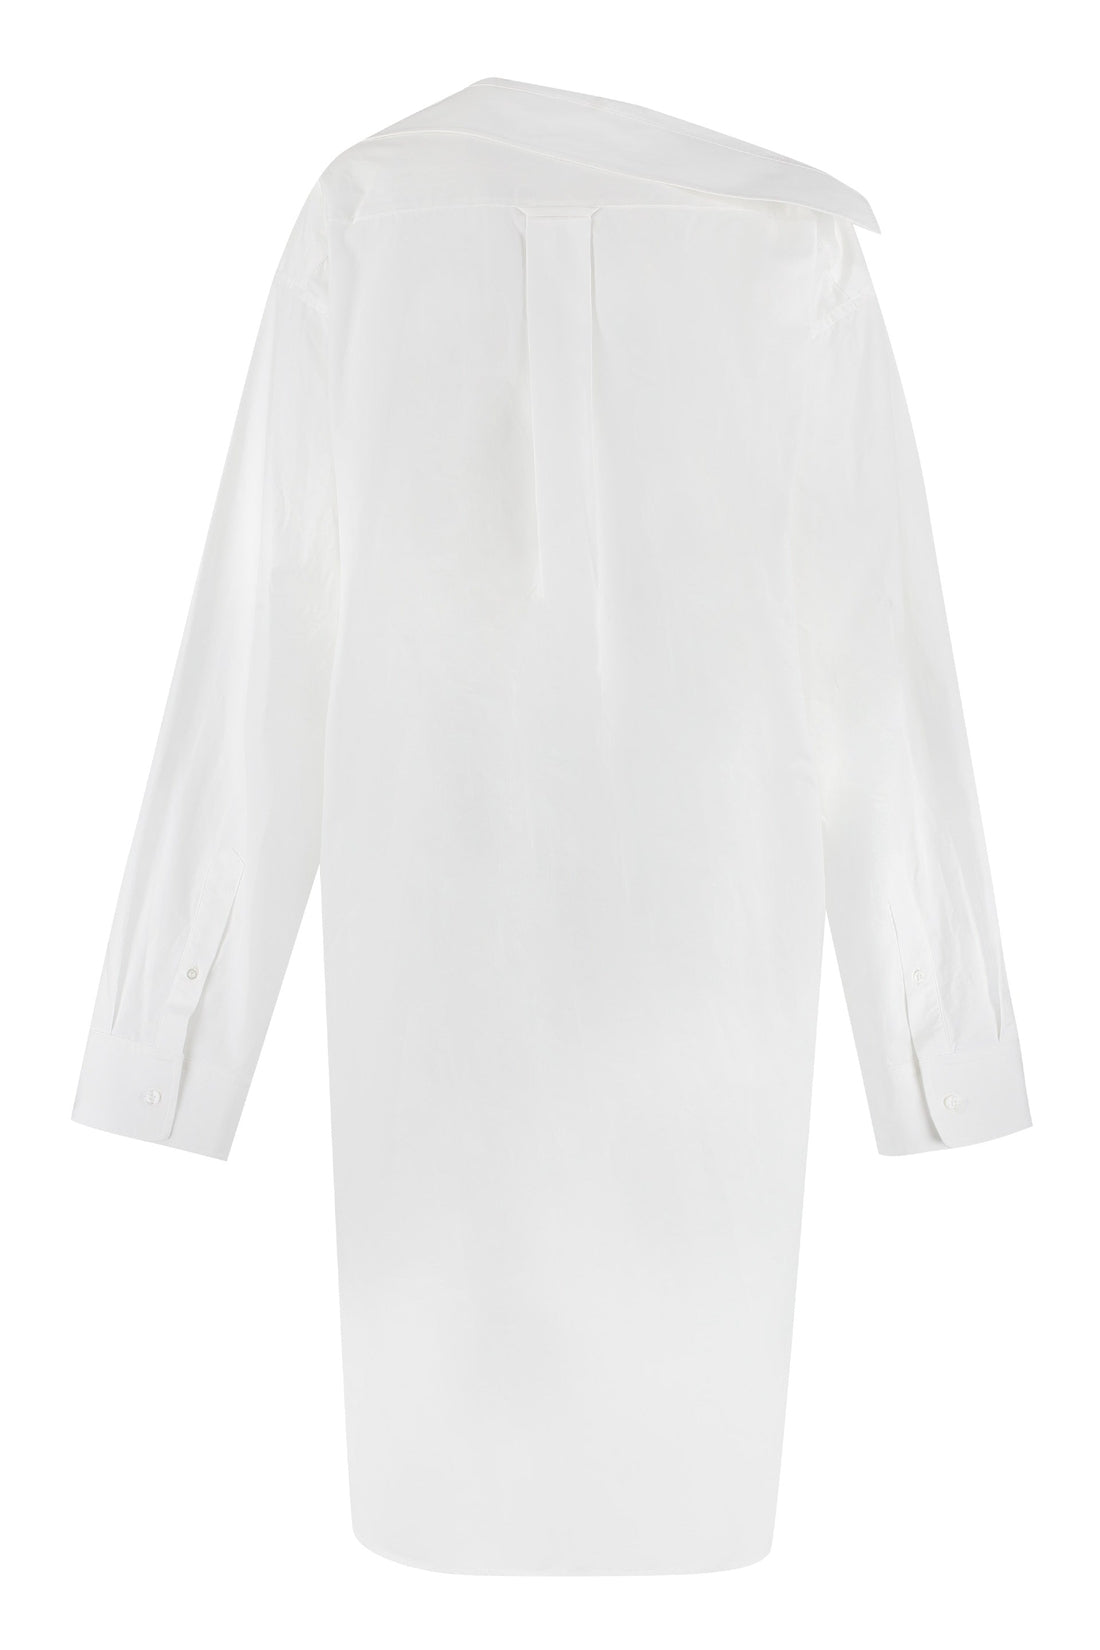 Balenciaga-OUTLET-SALE-Cotton shirtdress-ARCHIVIST